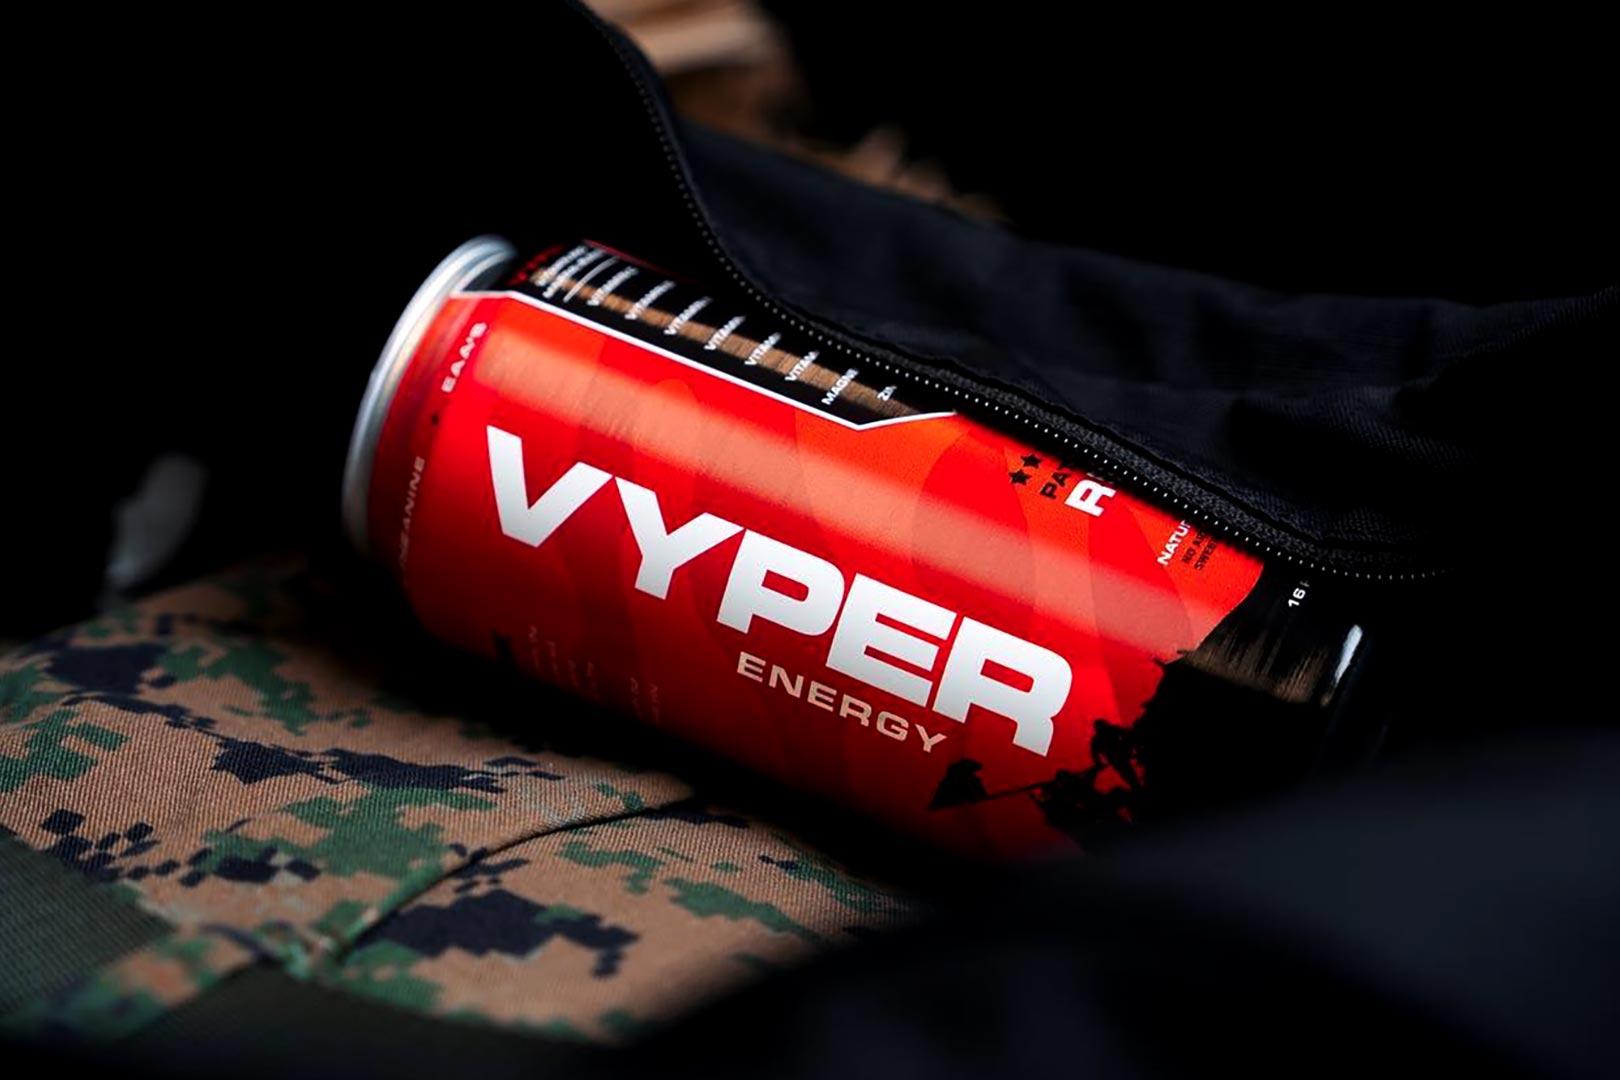 Vyper Energy Drink